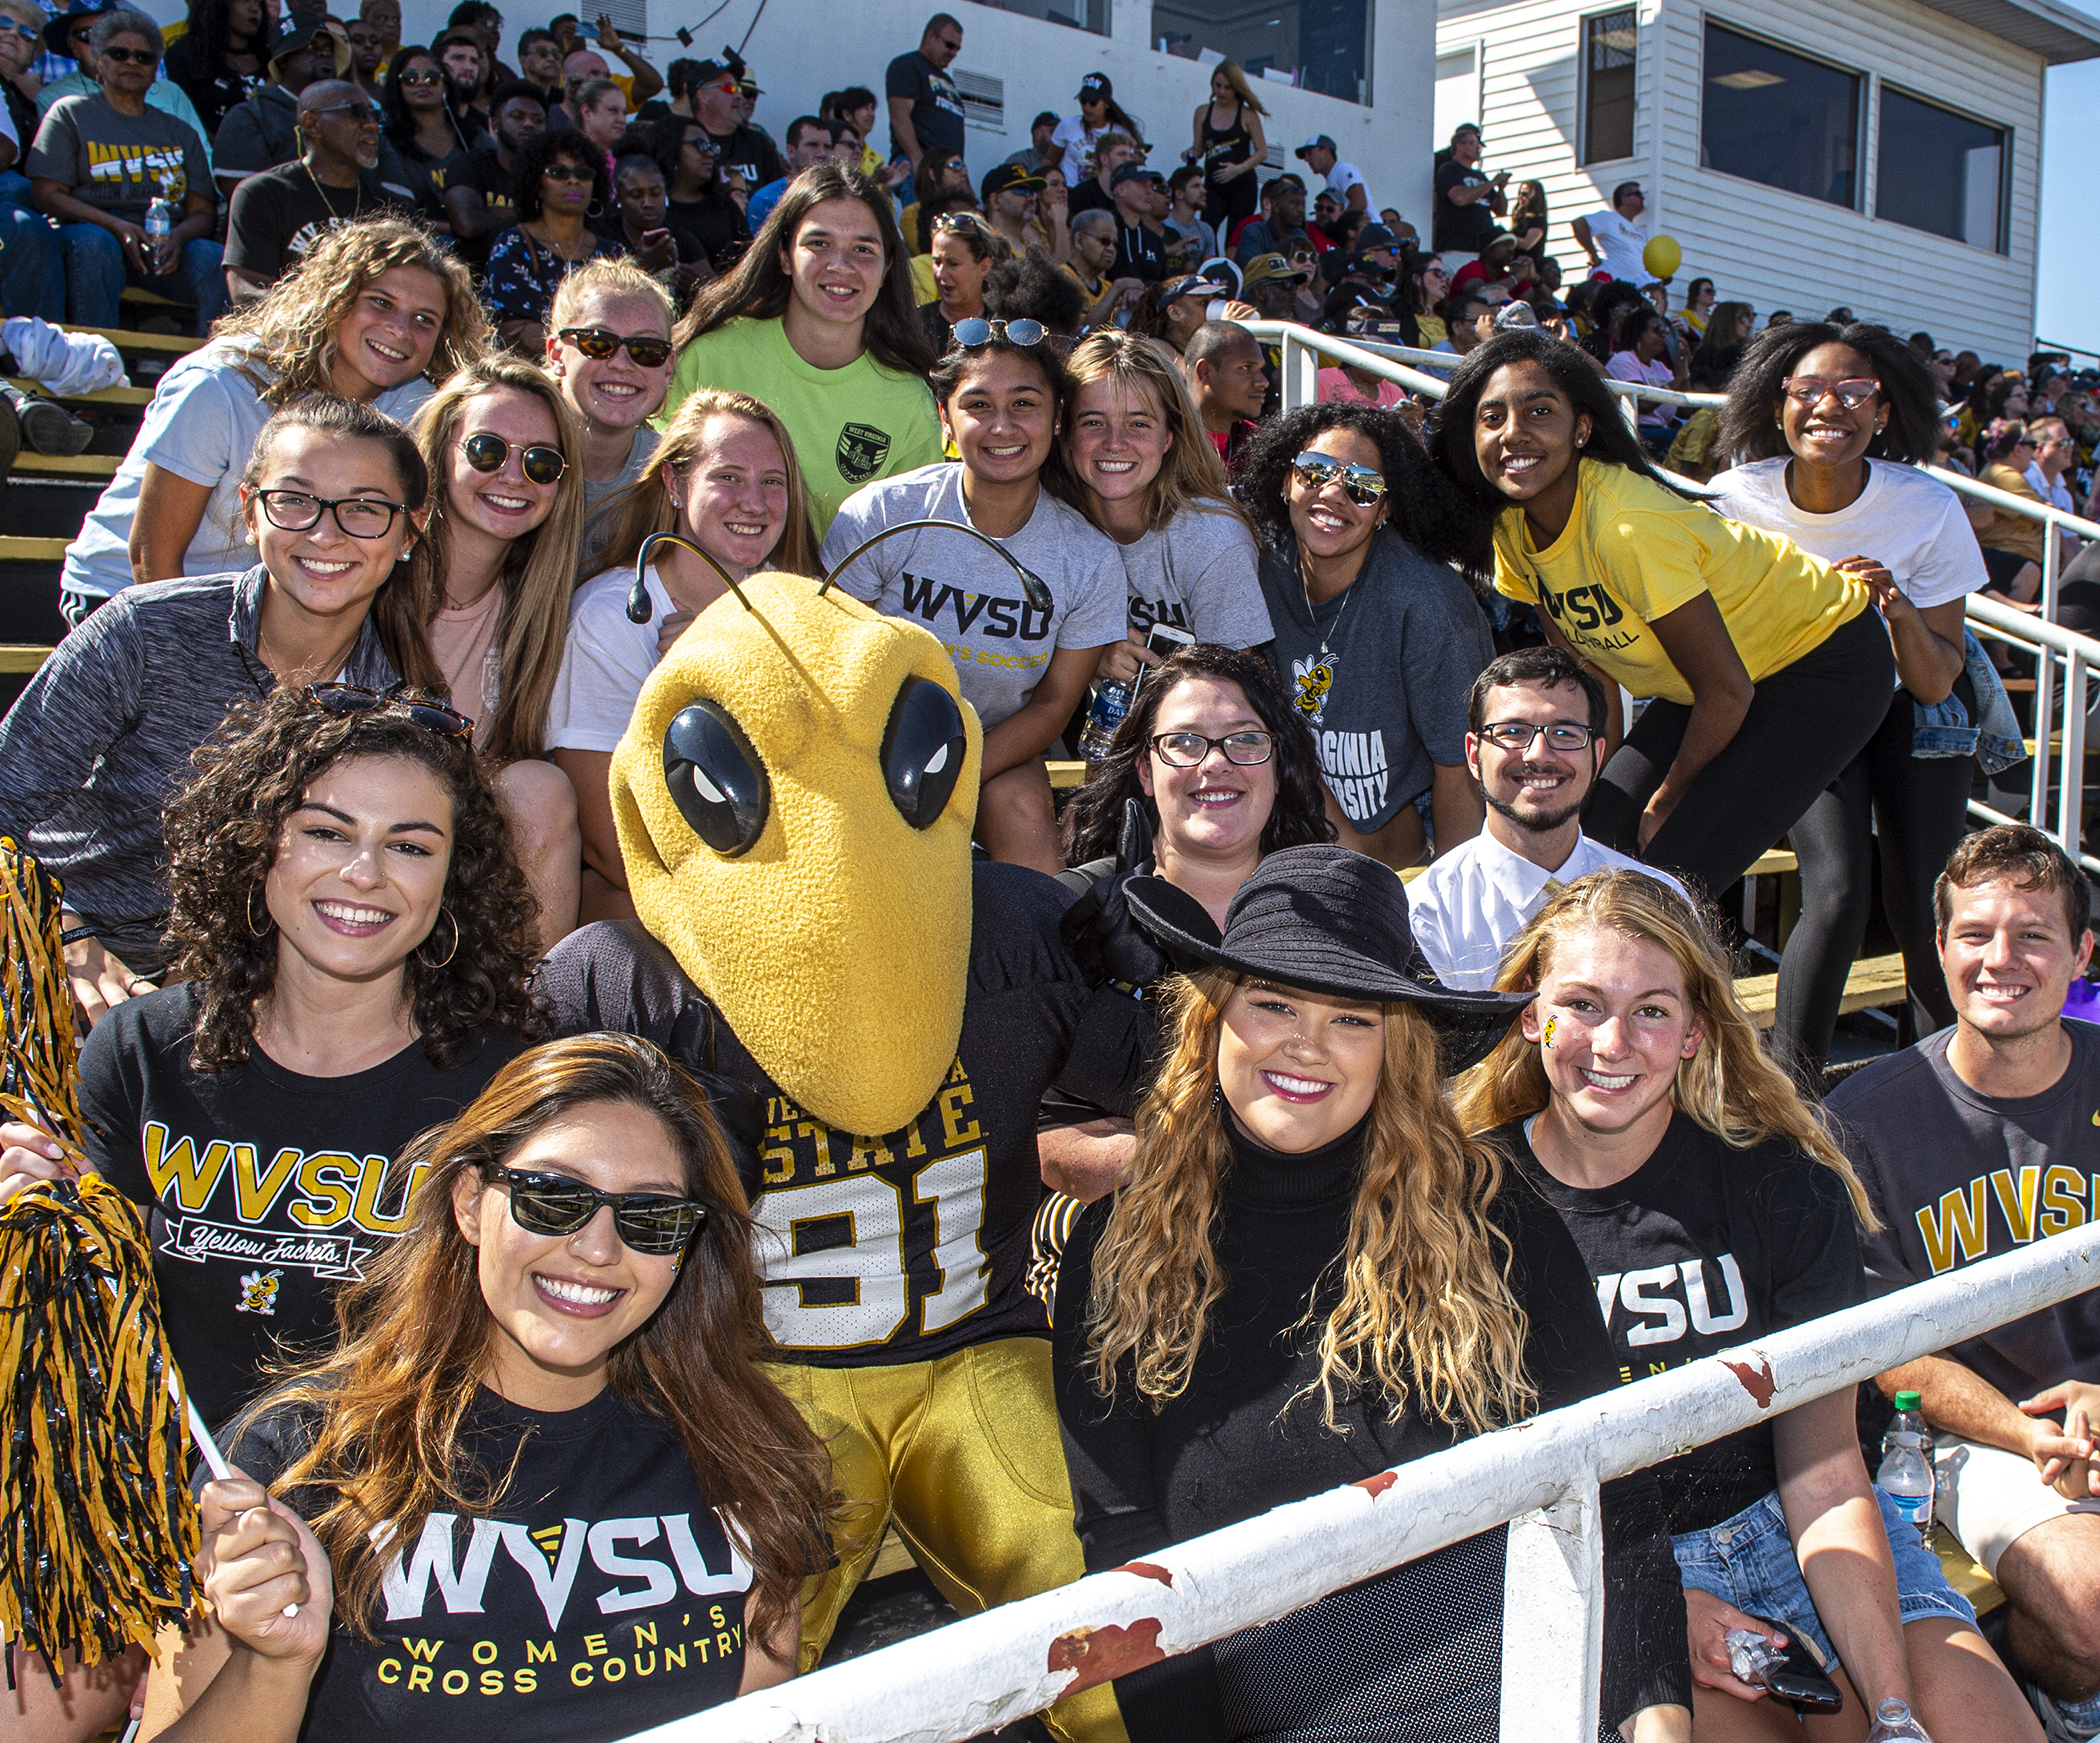 Students pose with the WVSU mascot